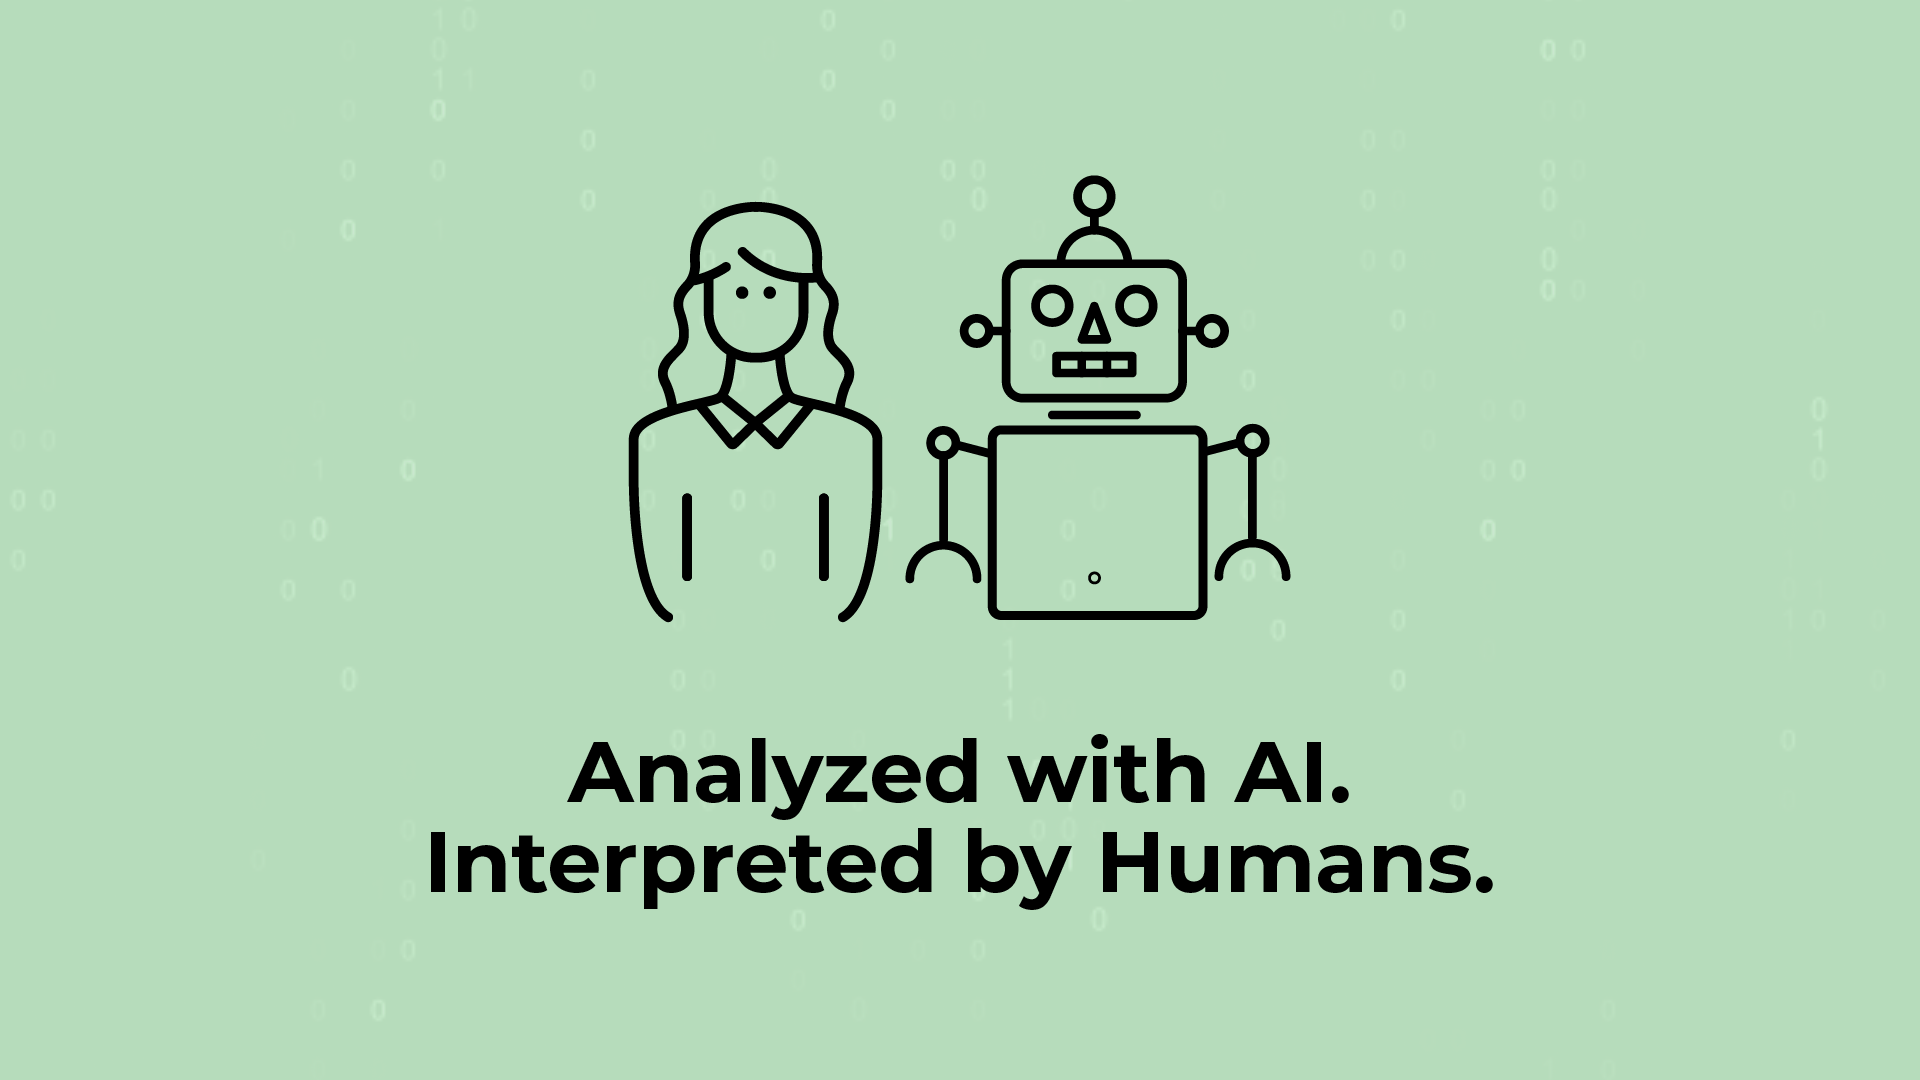  mood image robot and human with text